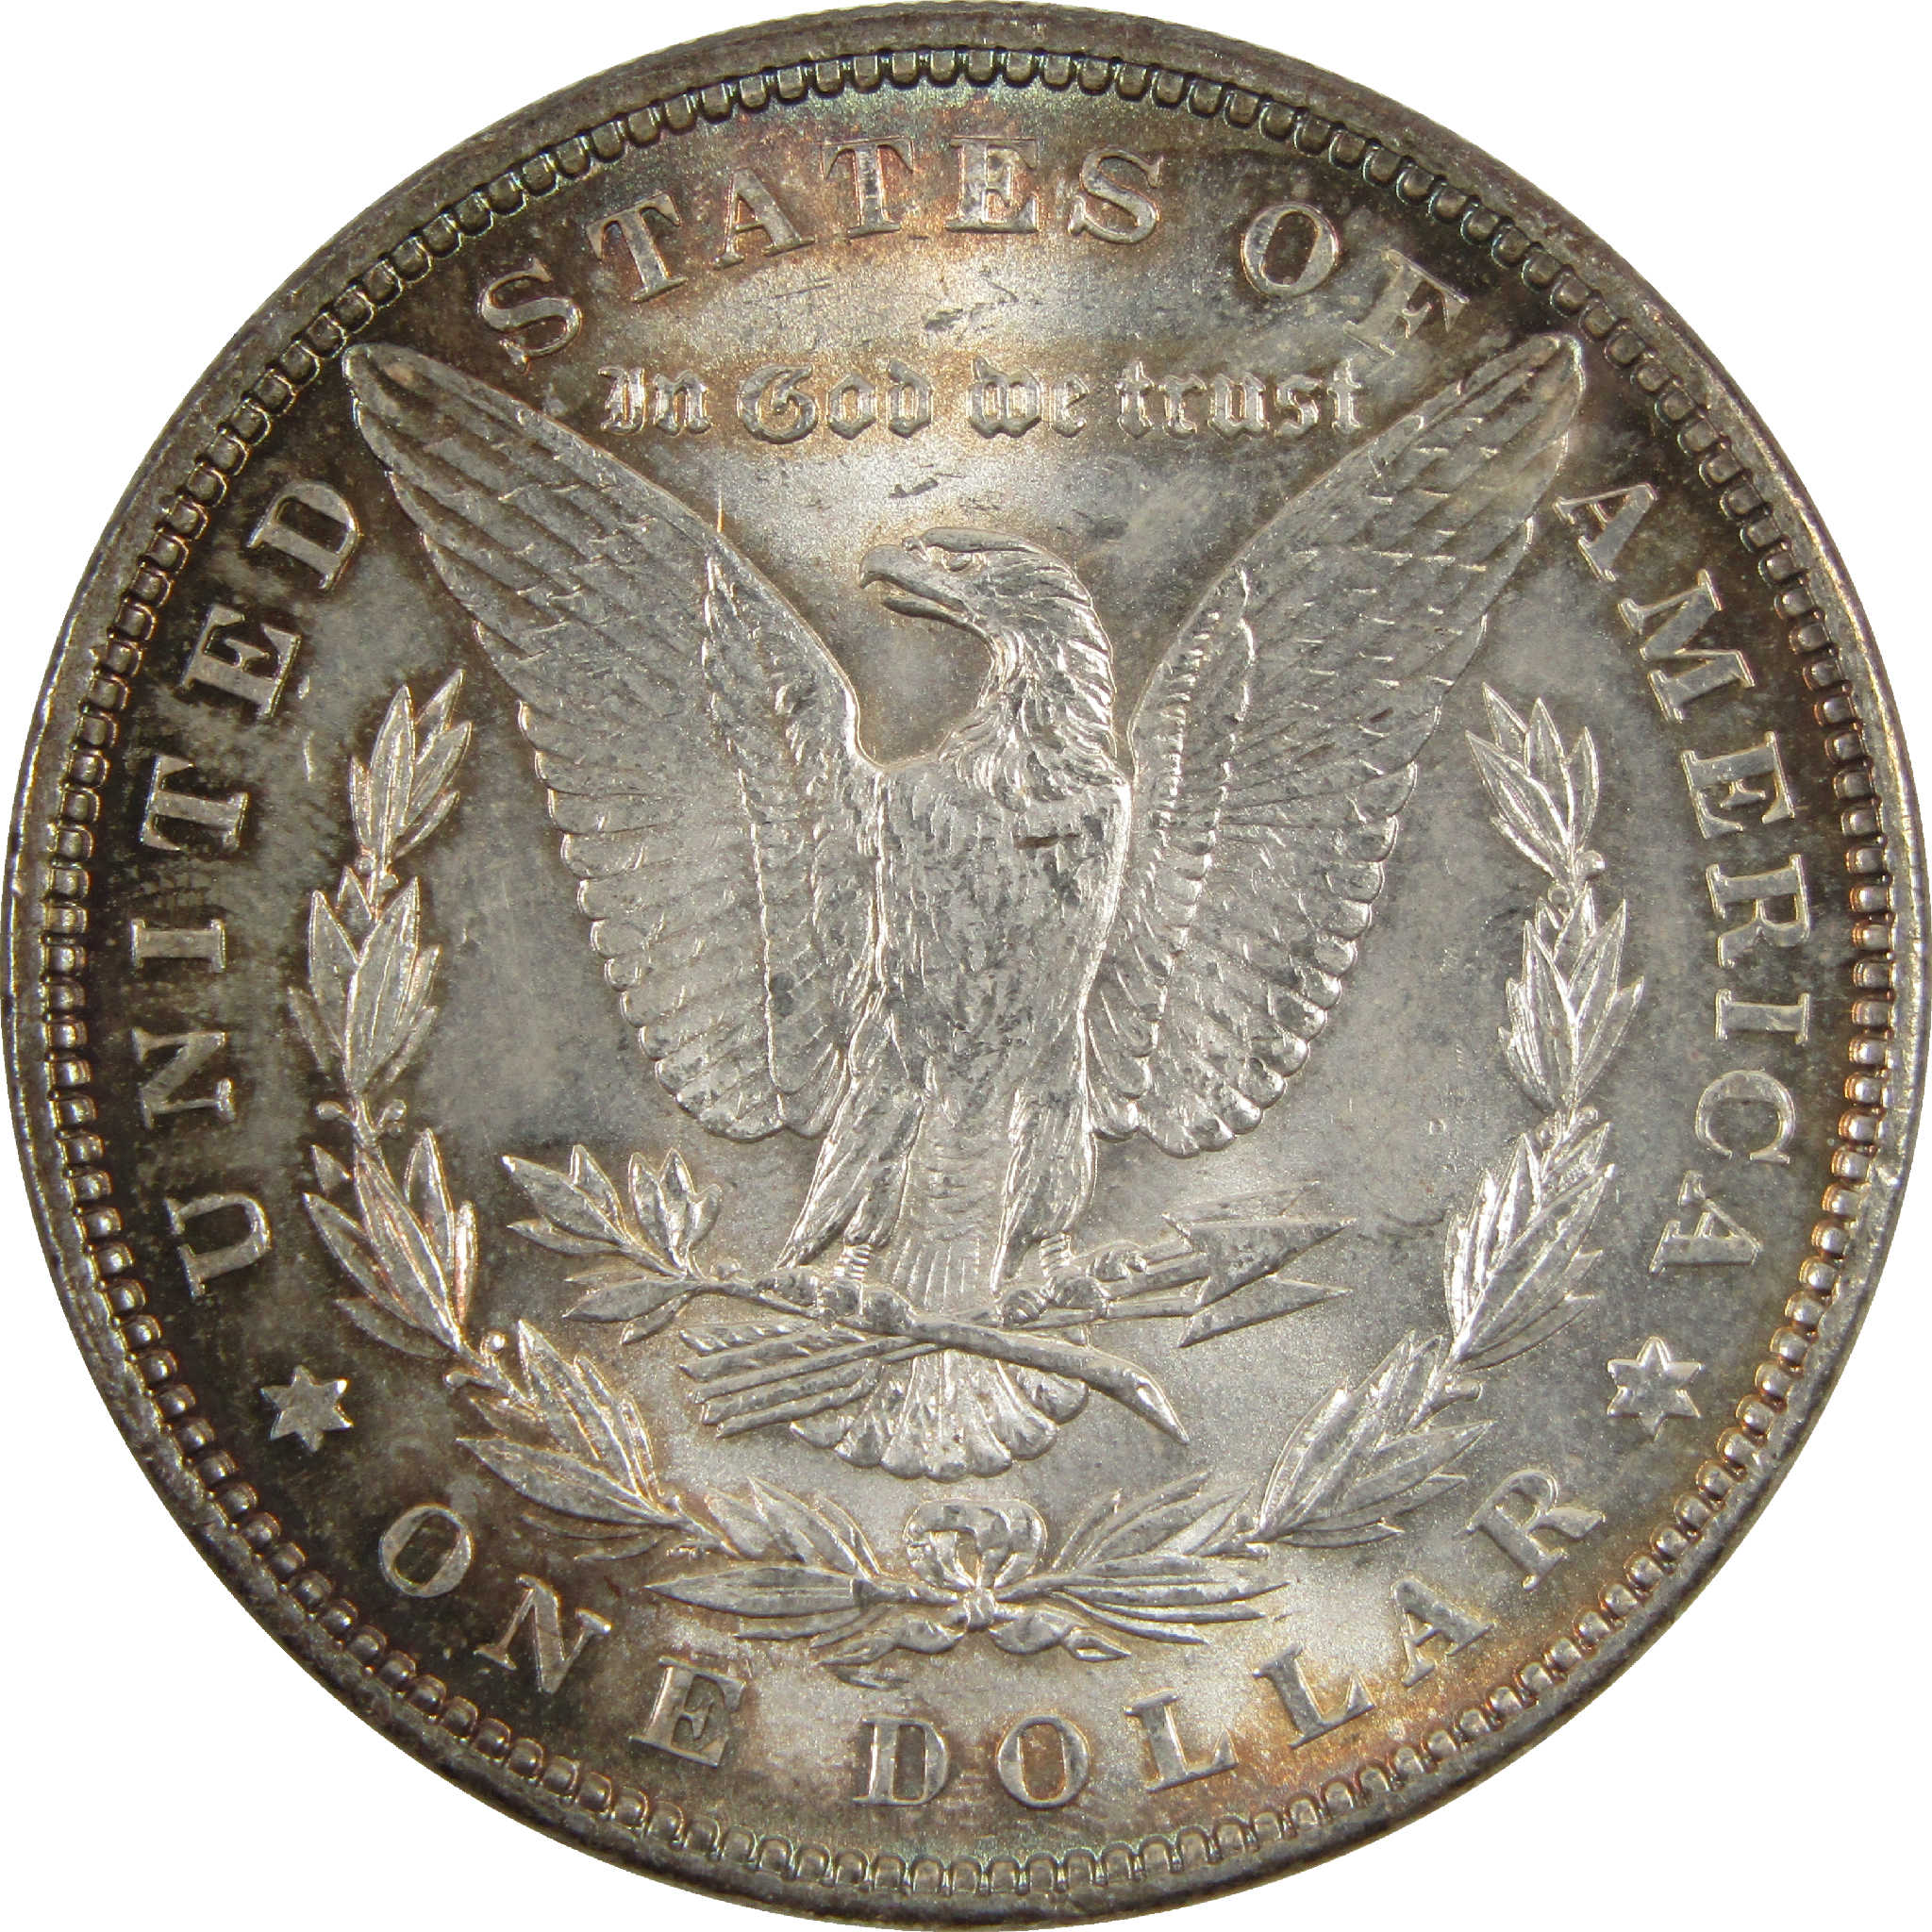 1890 Morgan Dollar Uncirculated Silver $1 Coin SKU:CPC6168 - Morgan coin - Morgan silver dollar - Morgan silver dollar for sale - Profile Coins &amp; Collectibles